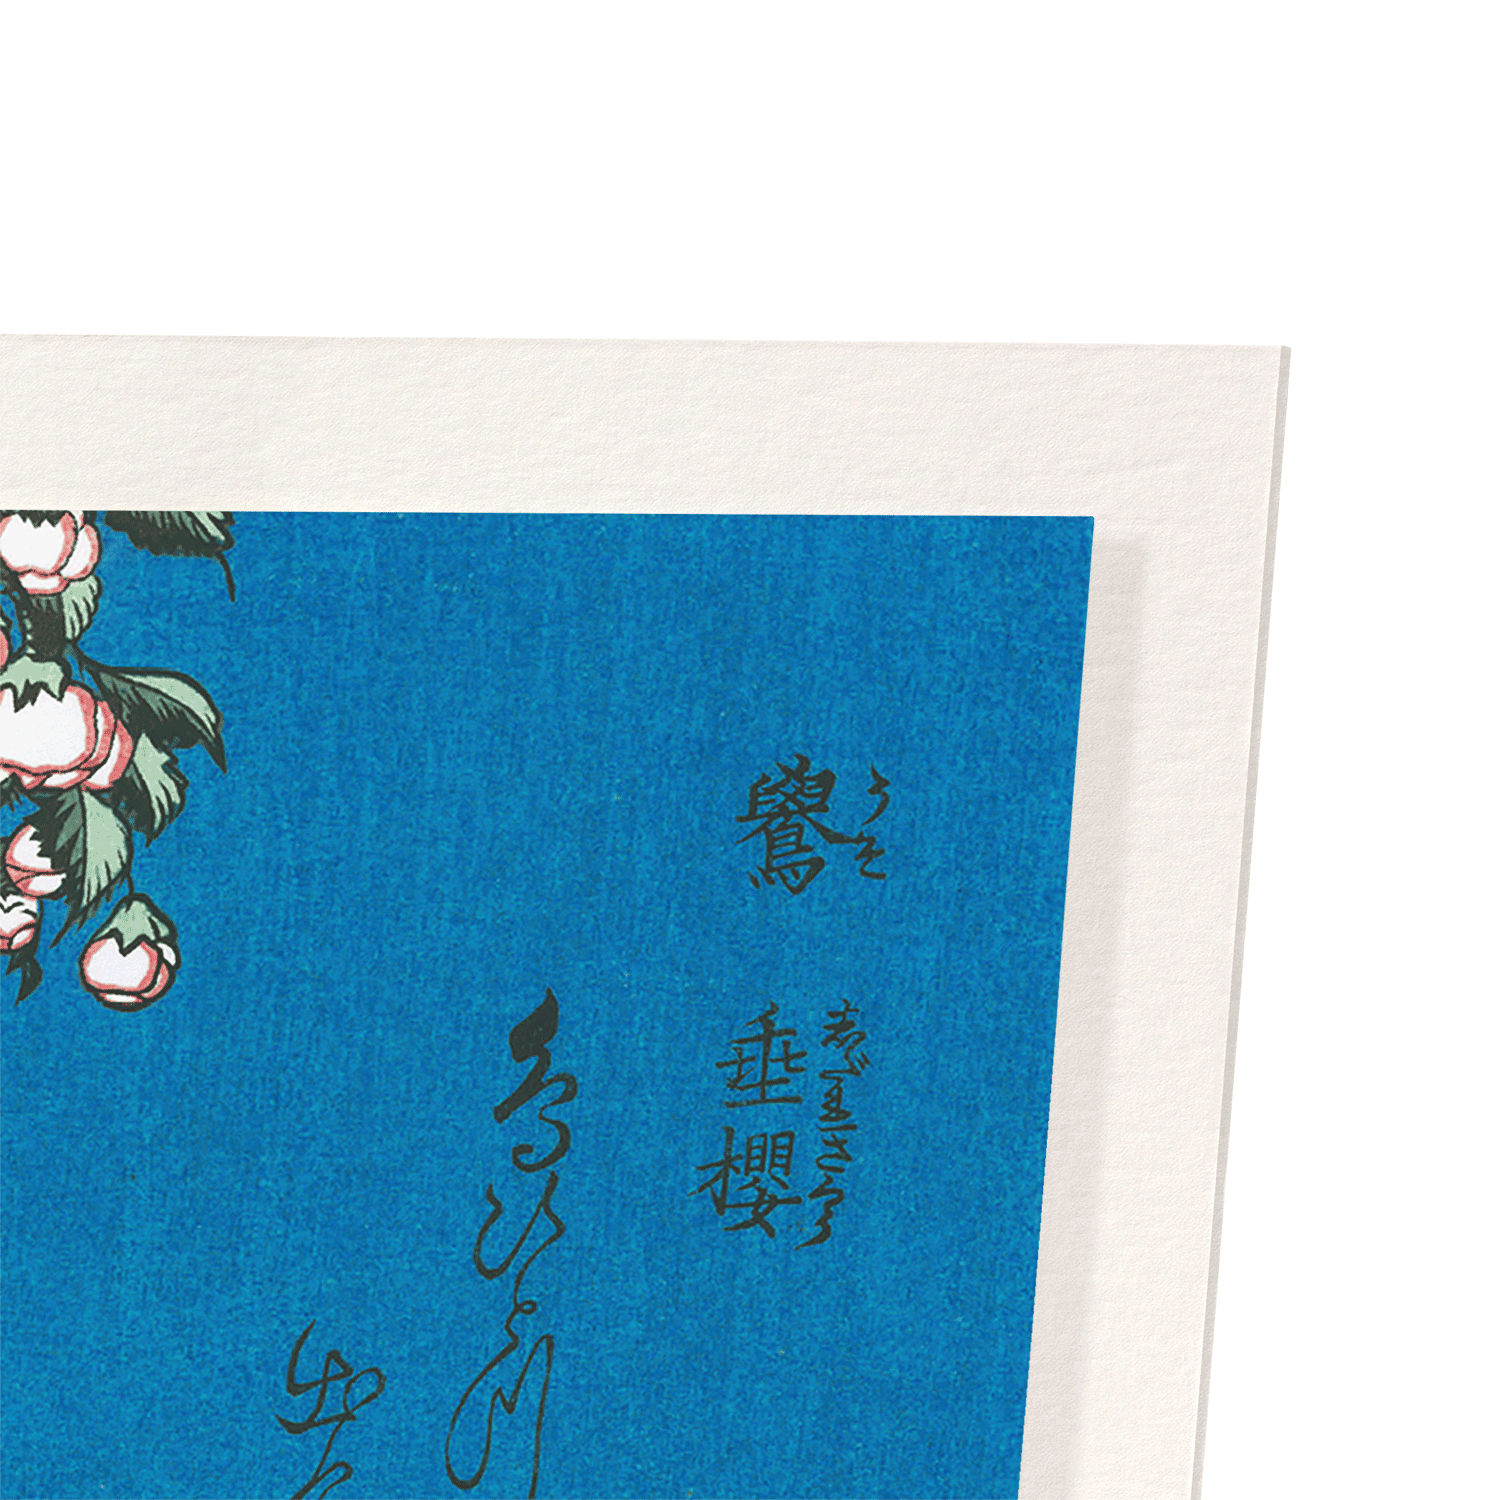 BULLFINCH AND DROOPING CHERRY: Japanese Art Print